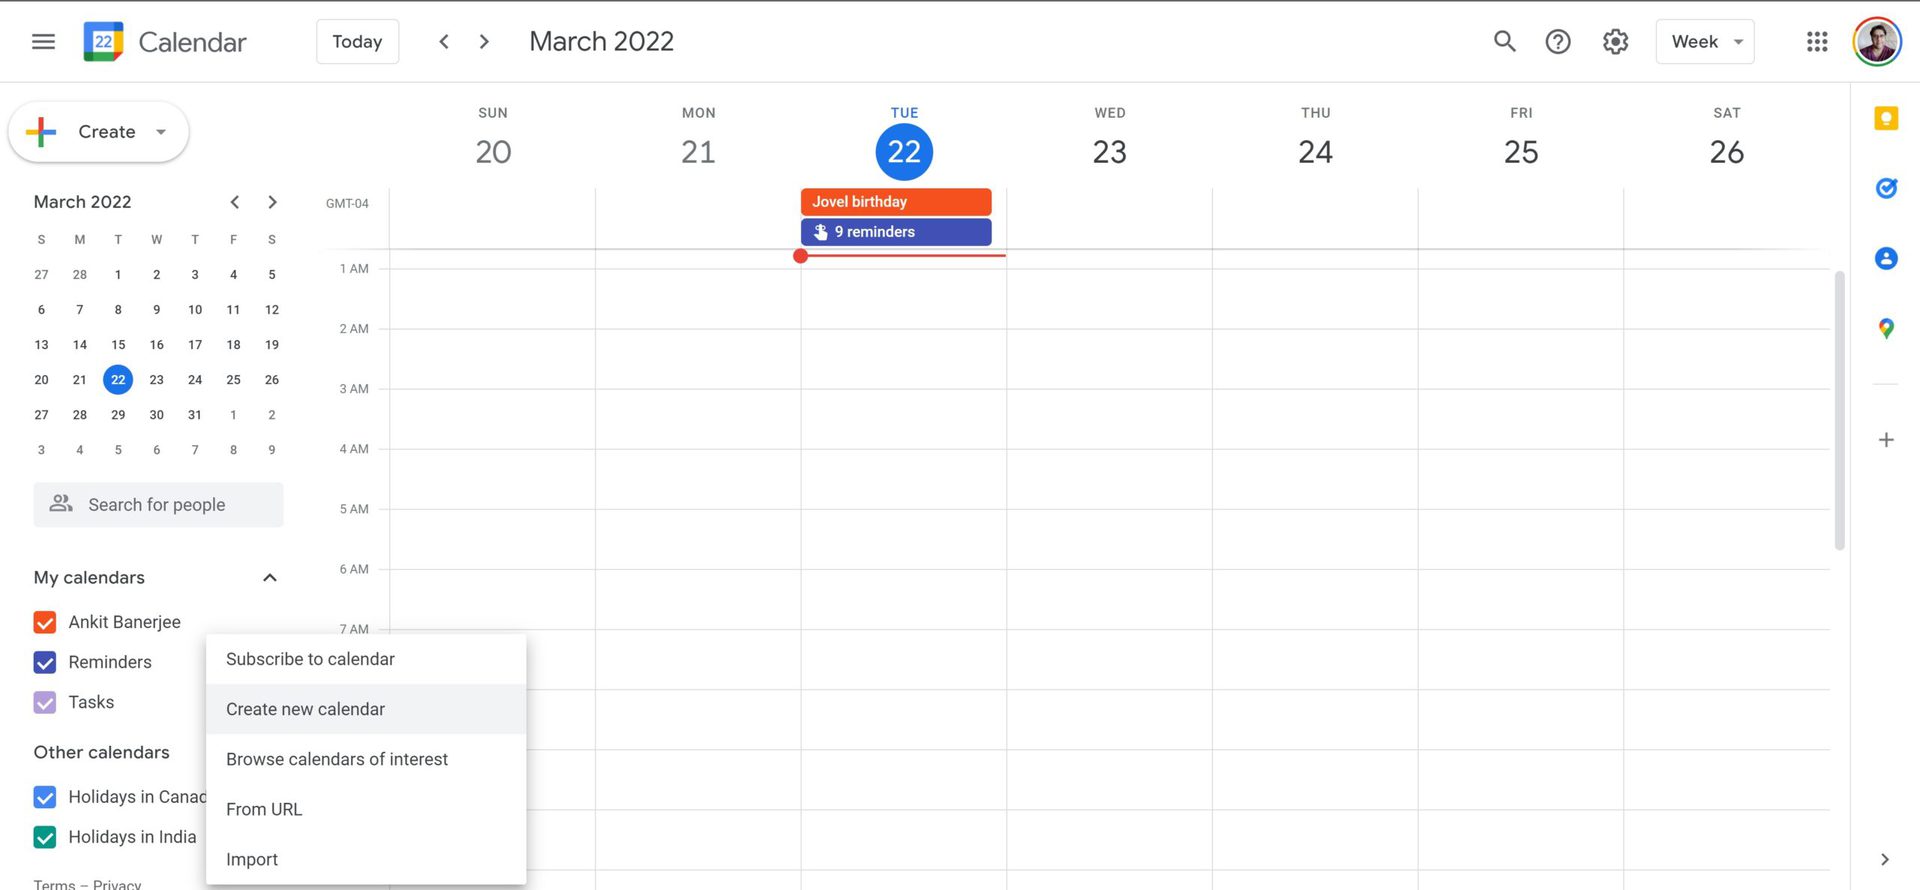 How do I add a non Gmail calendar to my Google Calendar?